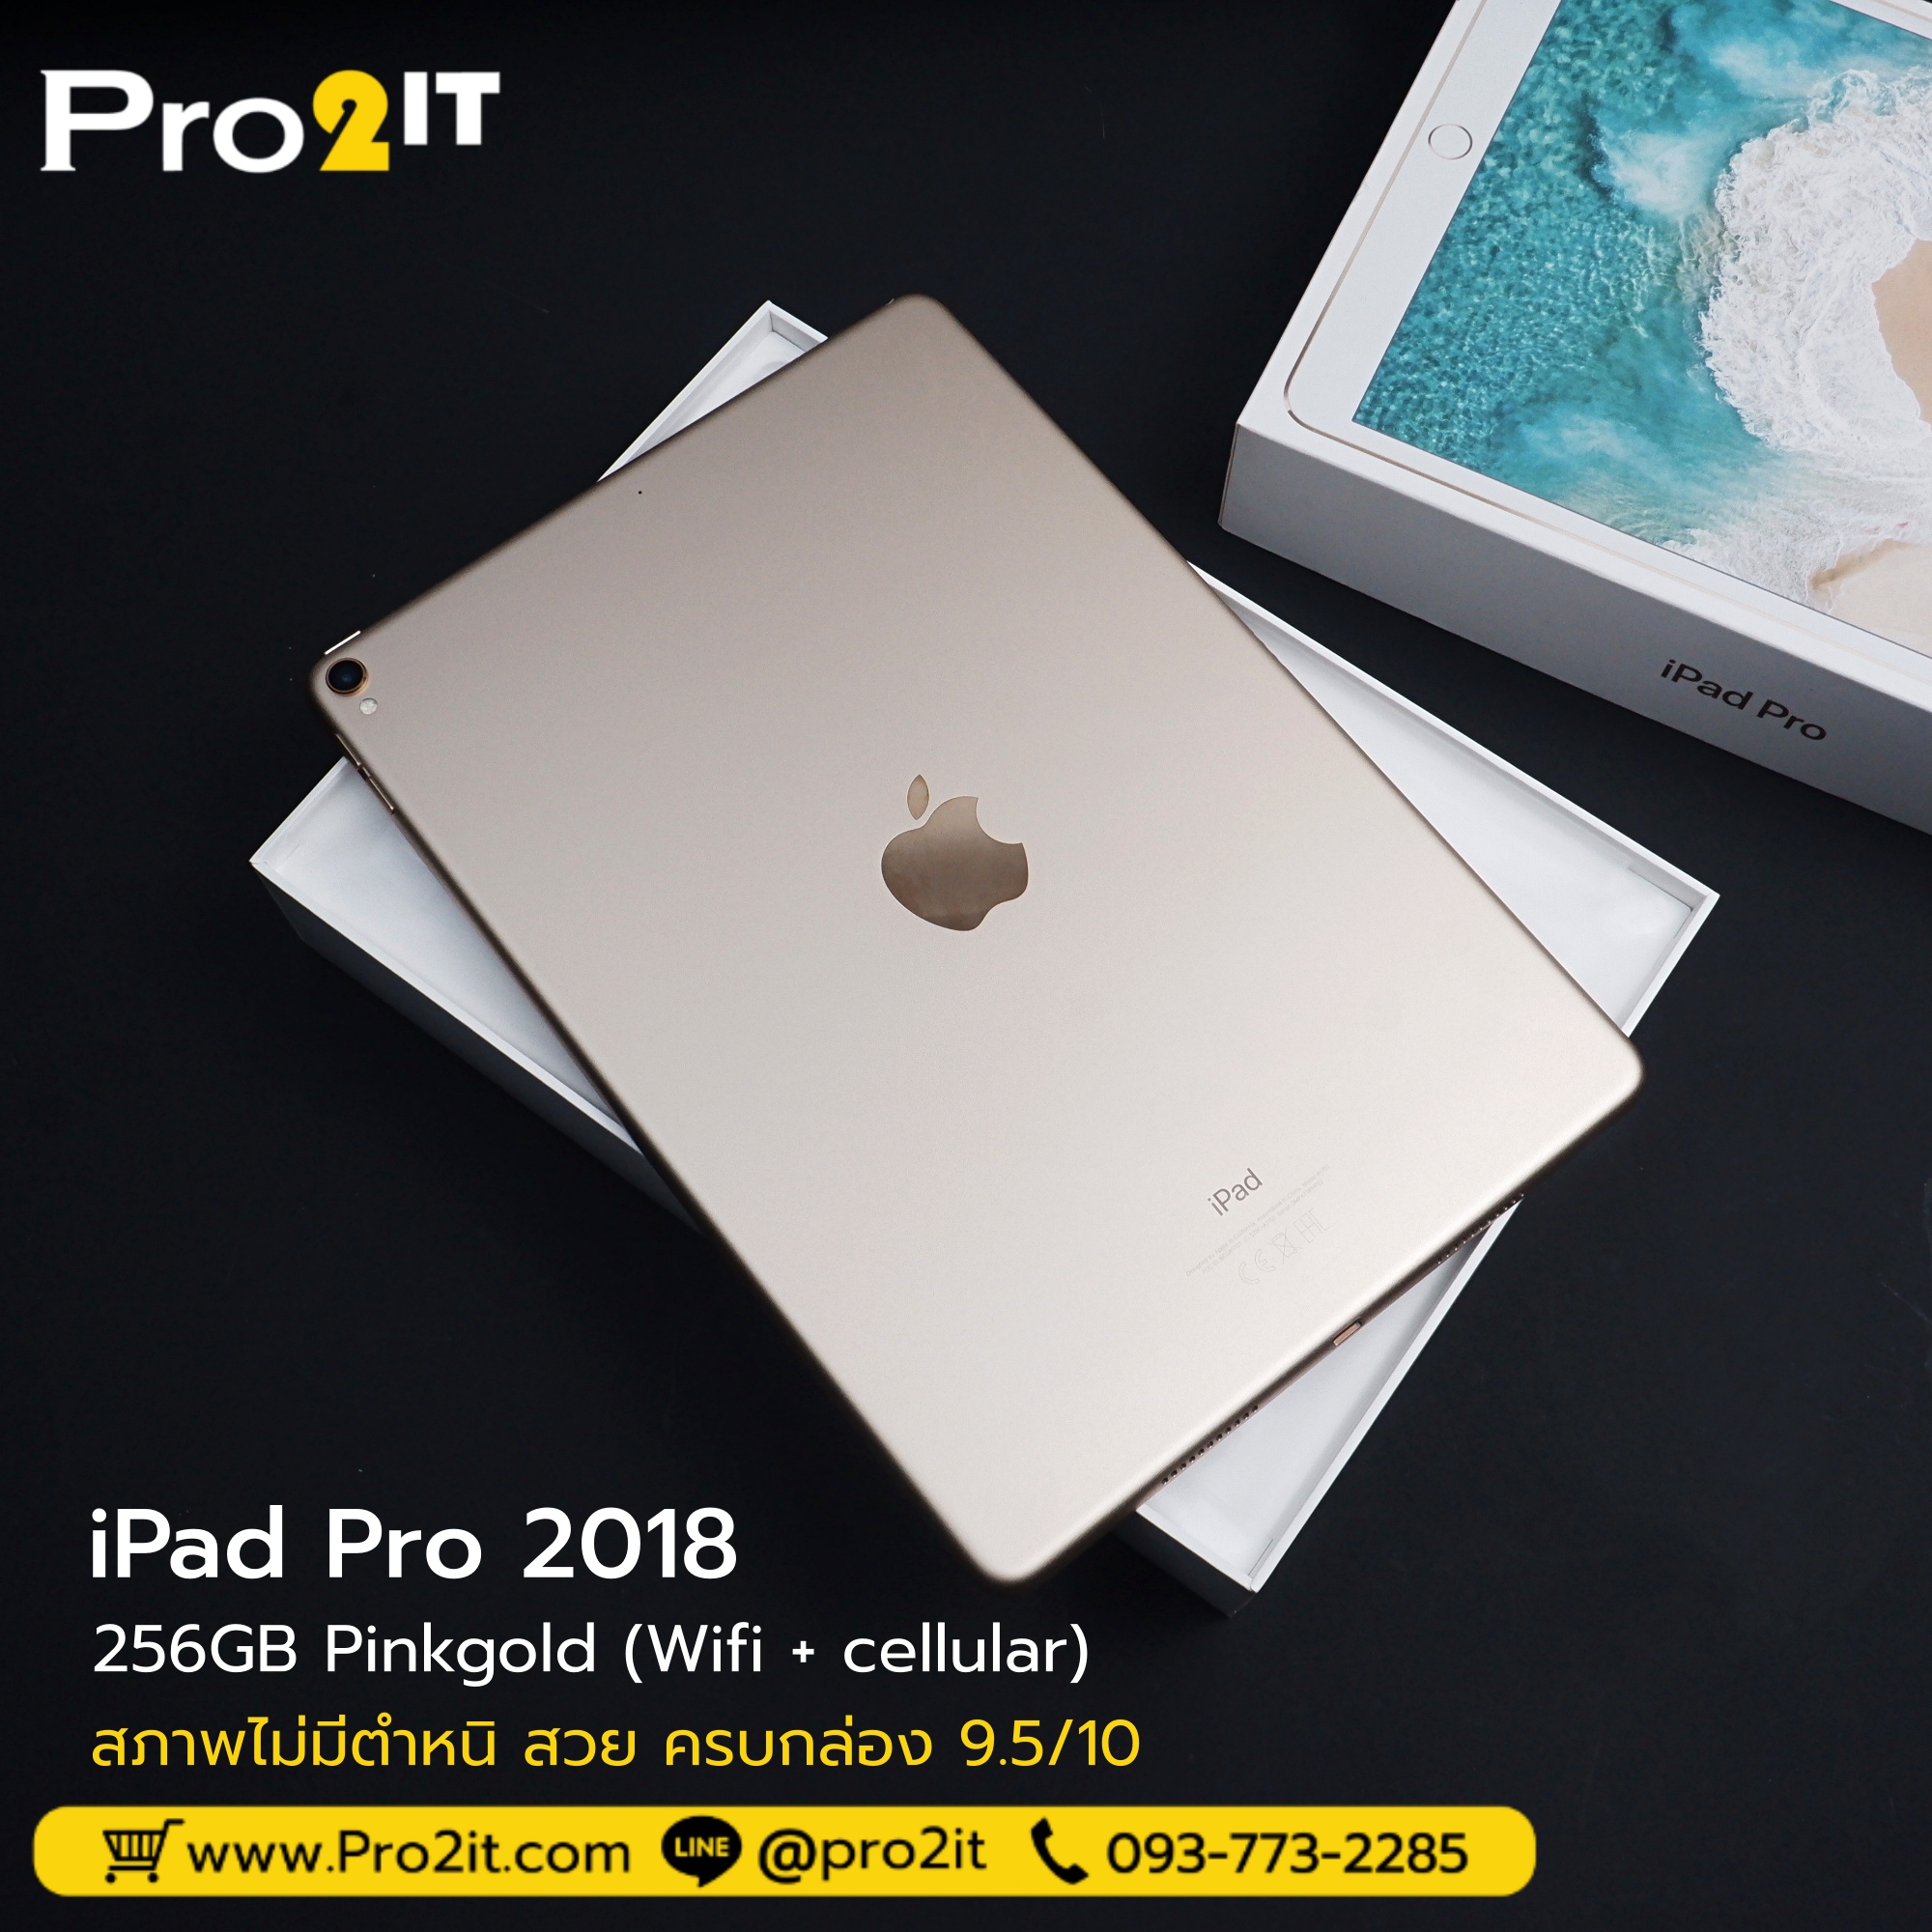 iPadPro 2018